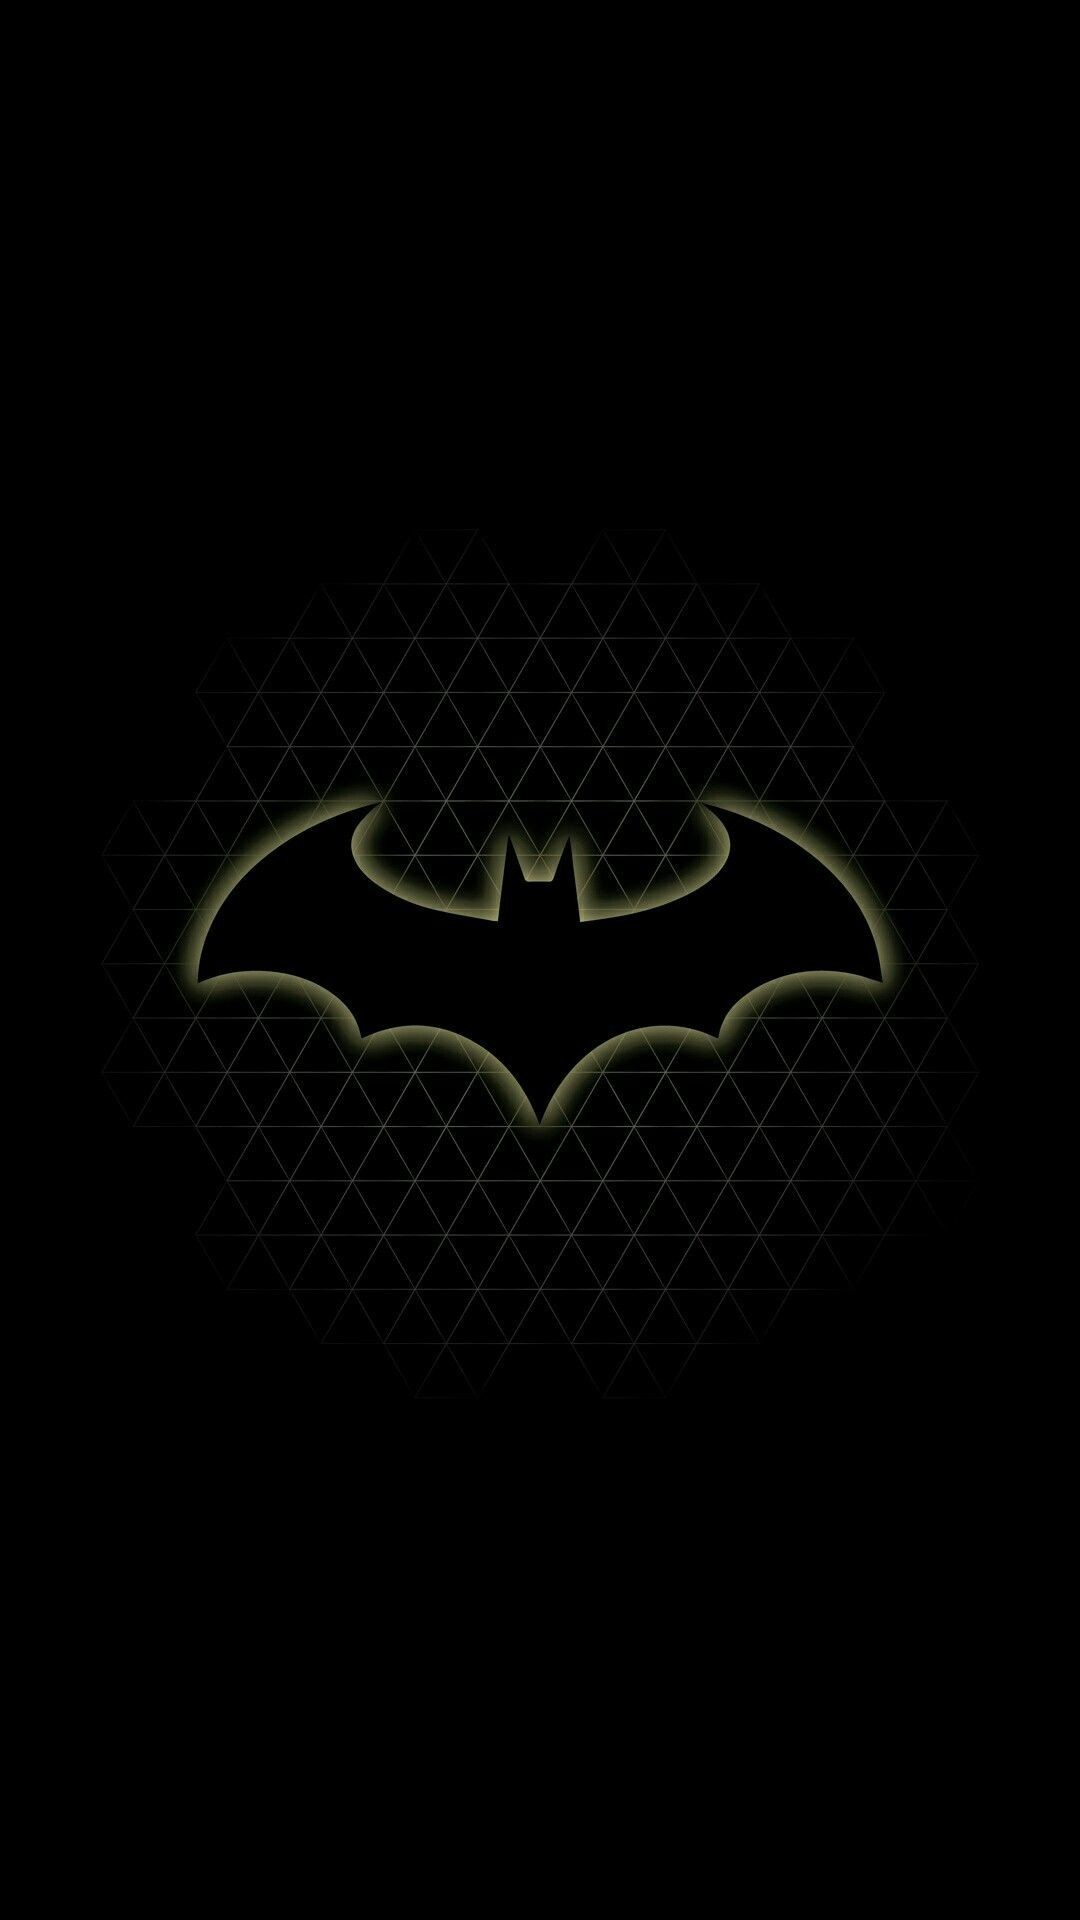 Batman Wallpaper Iphone - KoLPaPer - Awesome Free HD Wallpapers